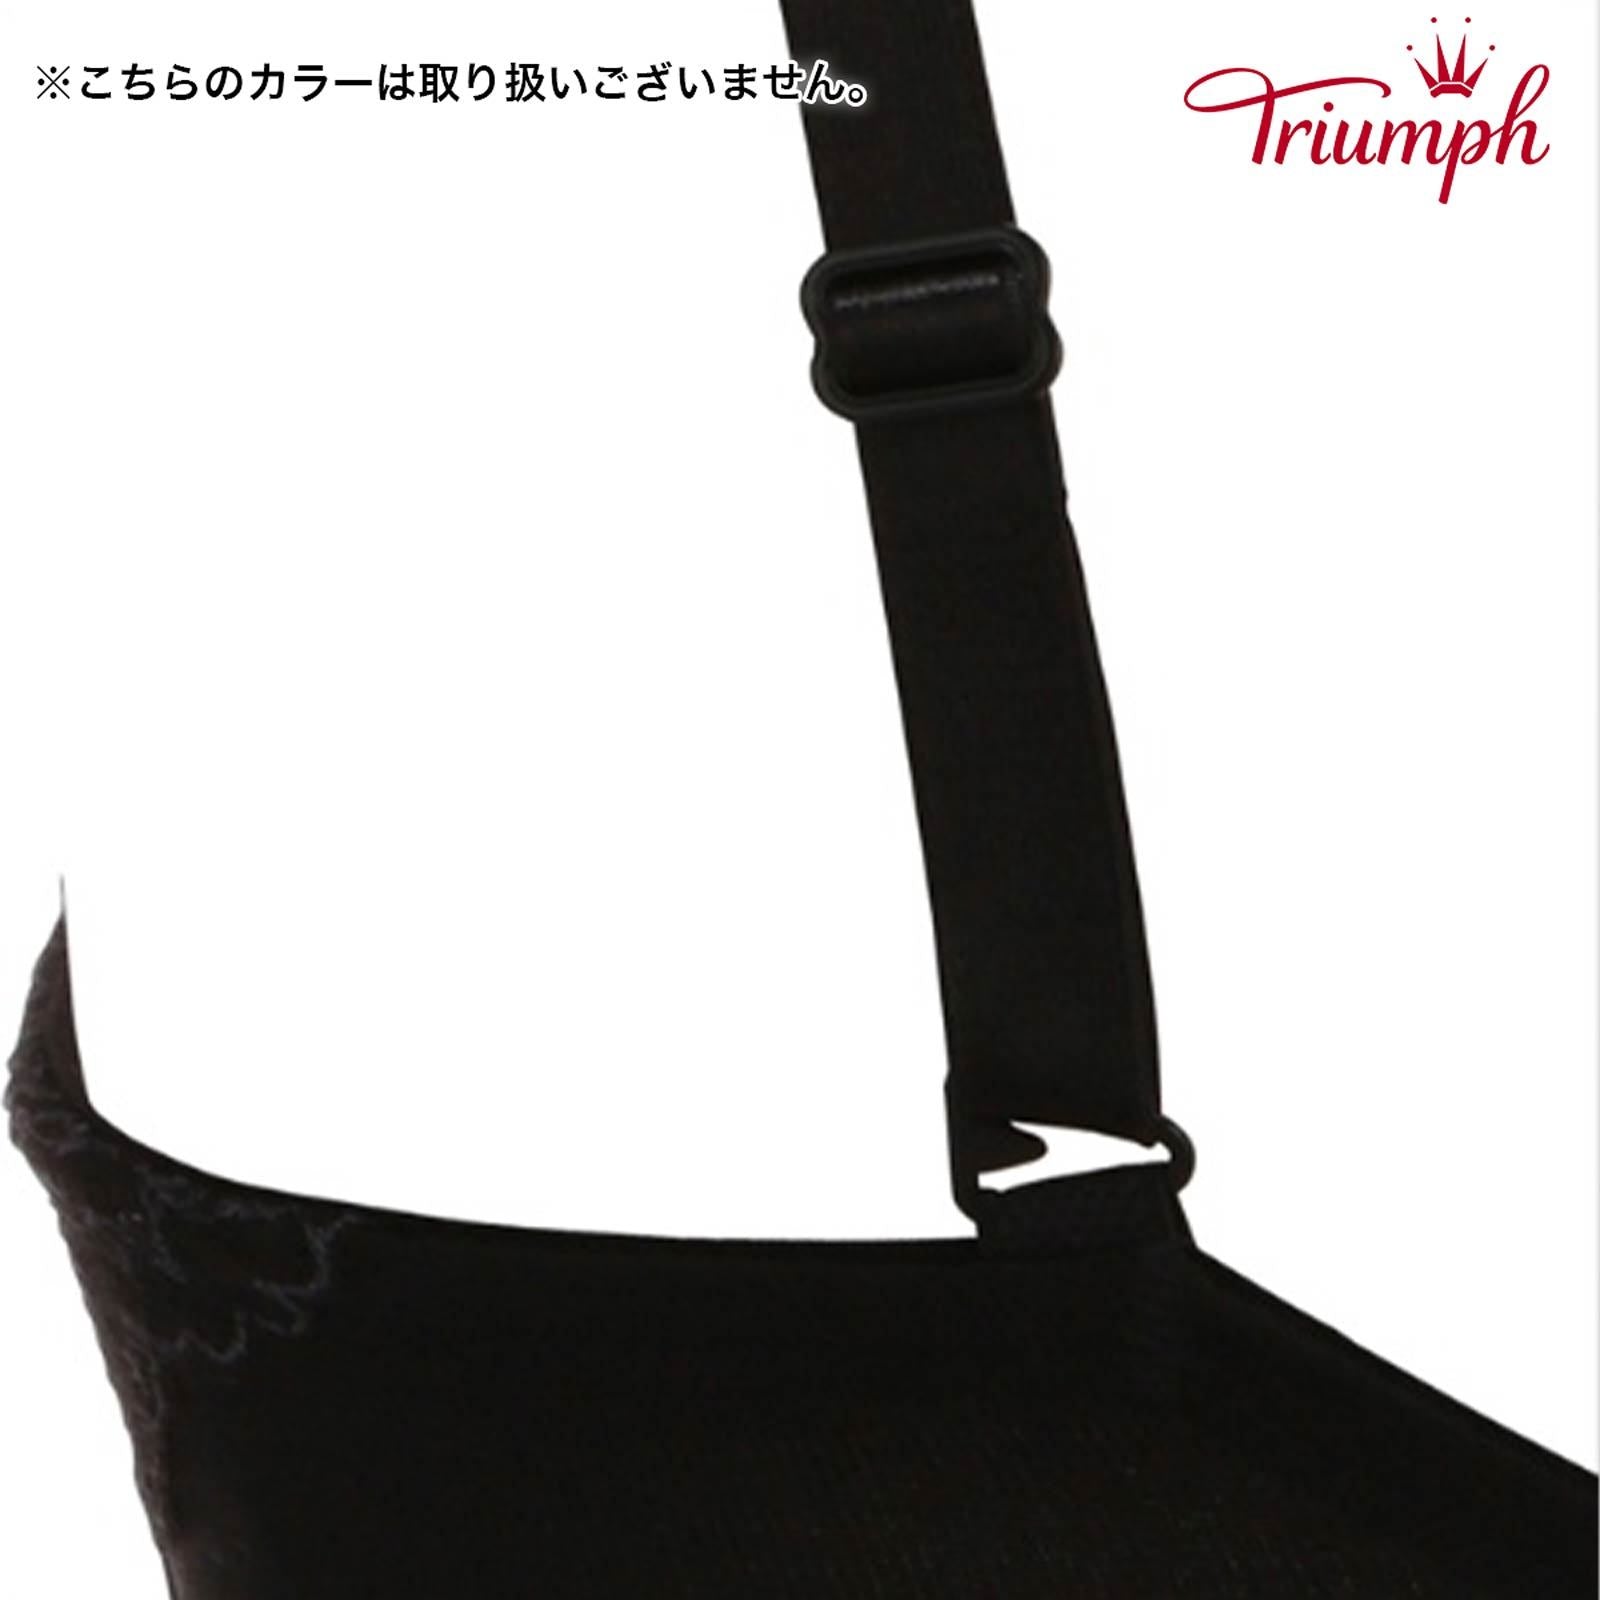 【Triumph】天使のブラ スリムライン 502 ブラジャー単品[10201845]